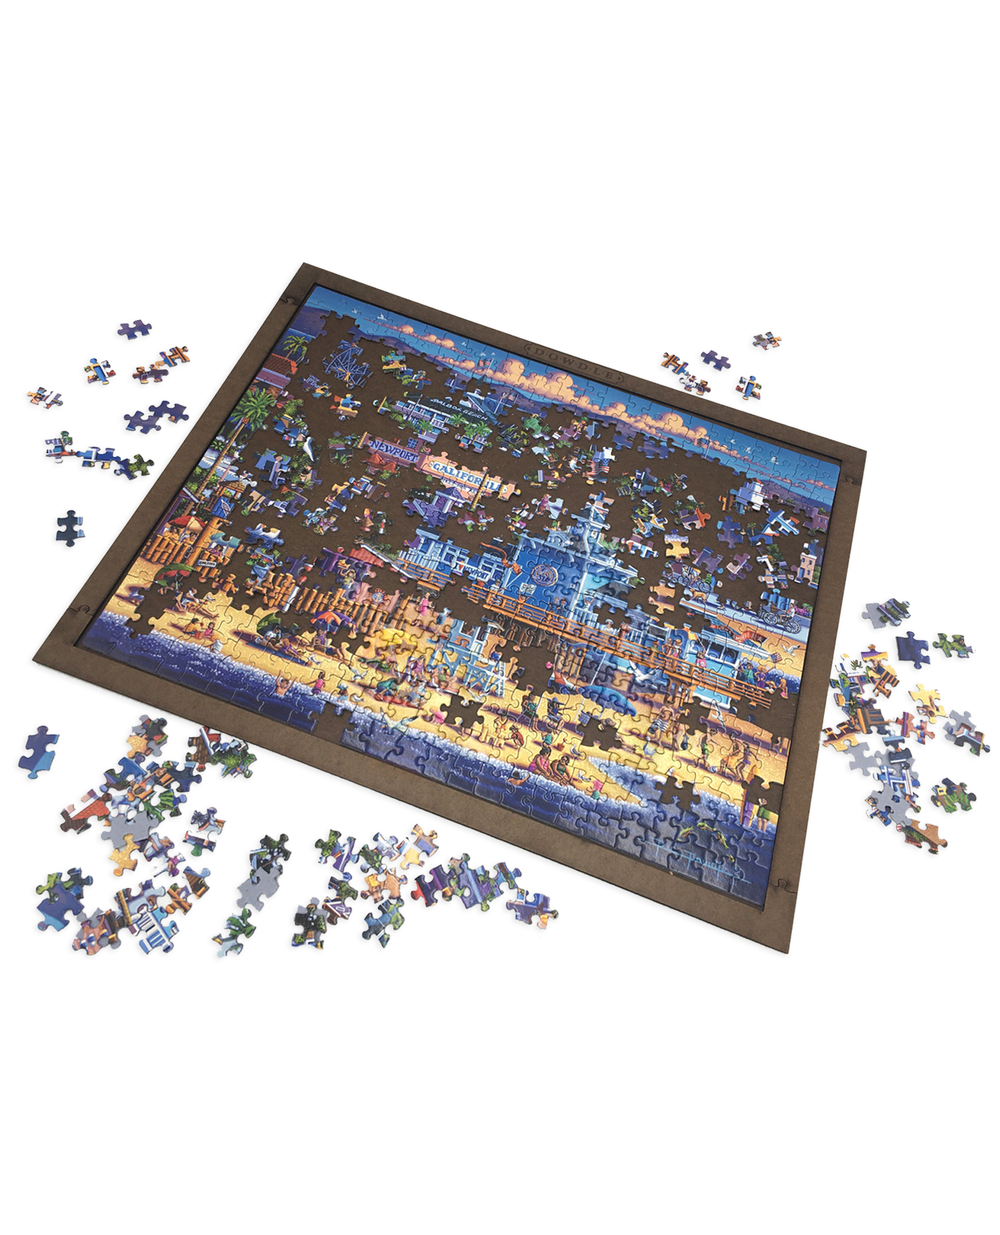 Extra Large Puzzle Tray - 19¼″×26⅝″